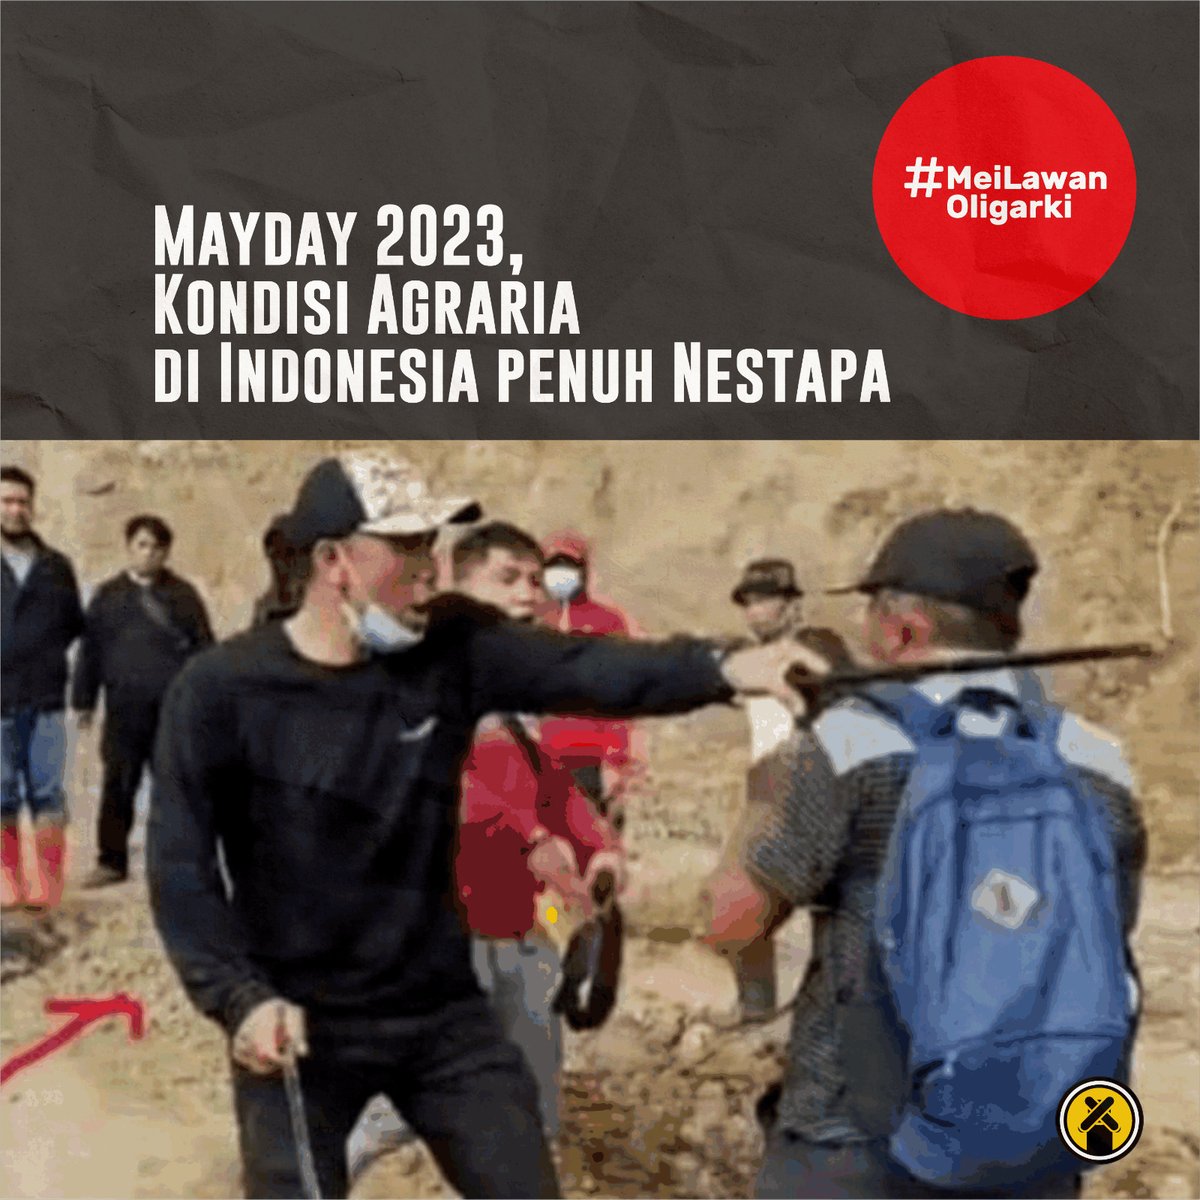 #MayDay di Indonesia di tahun ini terbilang penuh nestapa dan berkalang tanah bagi Kaum Buruh. #MeiLawanOligarki